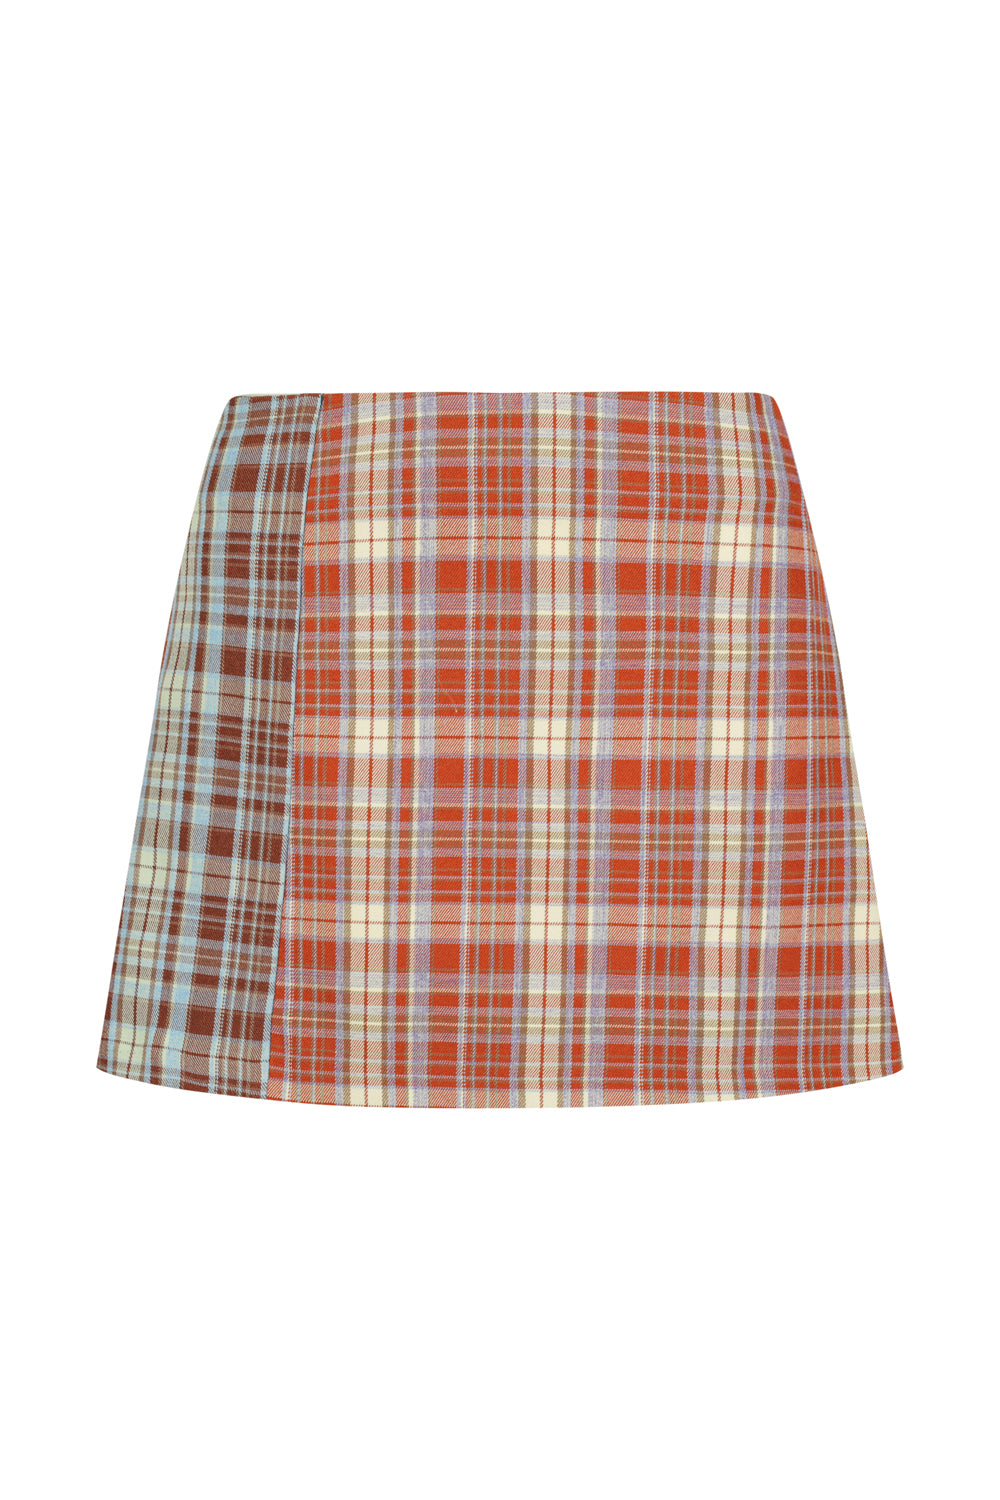 The mini skirt